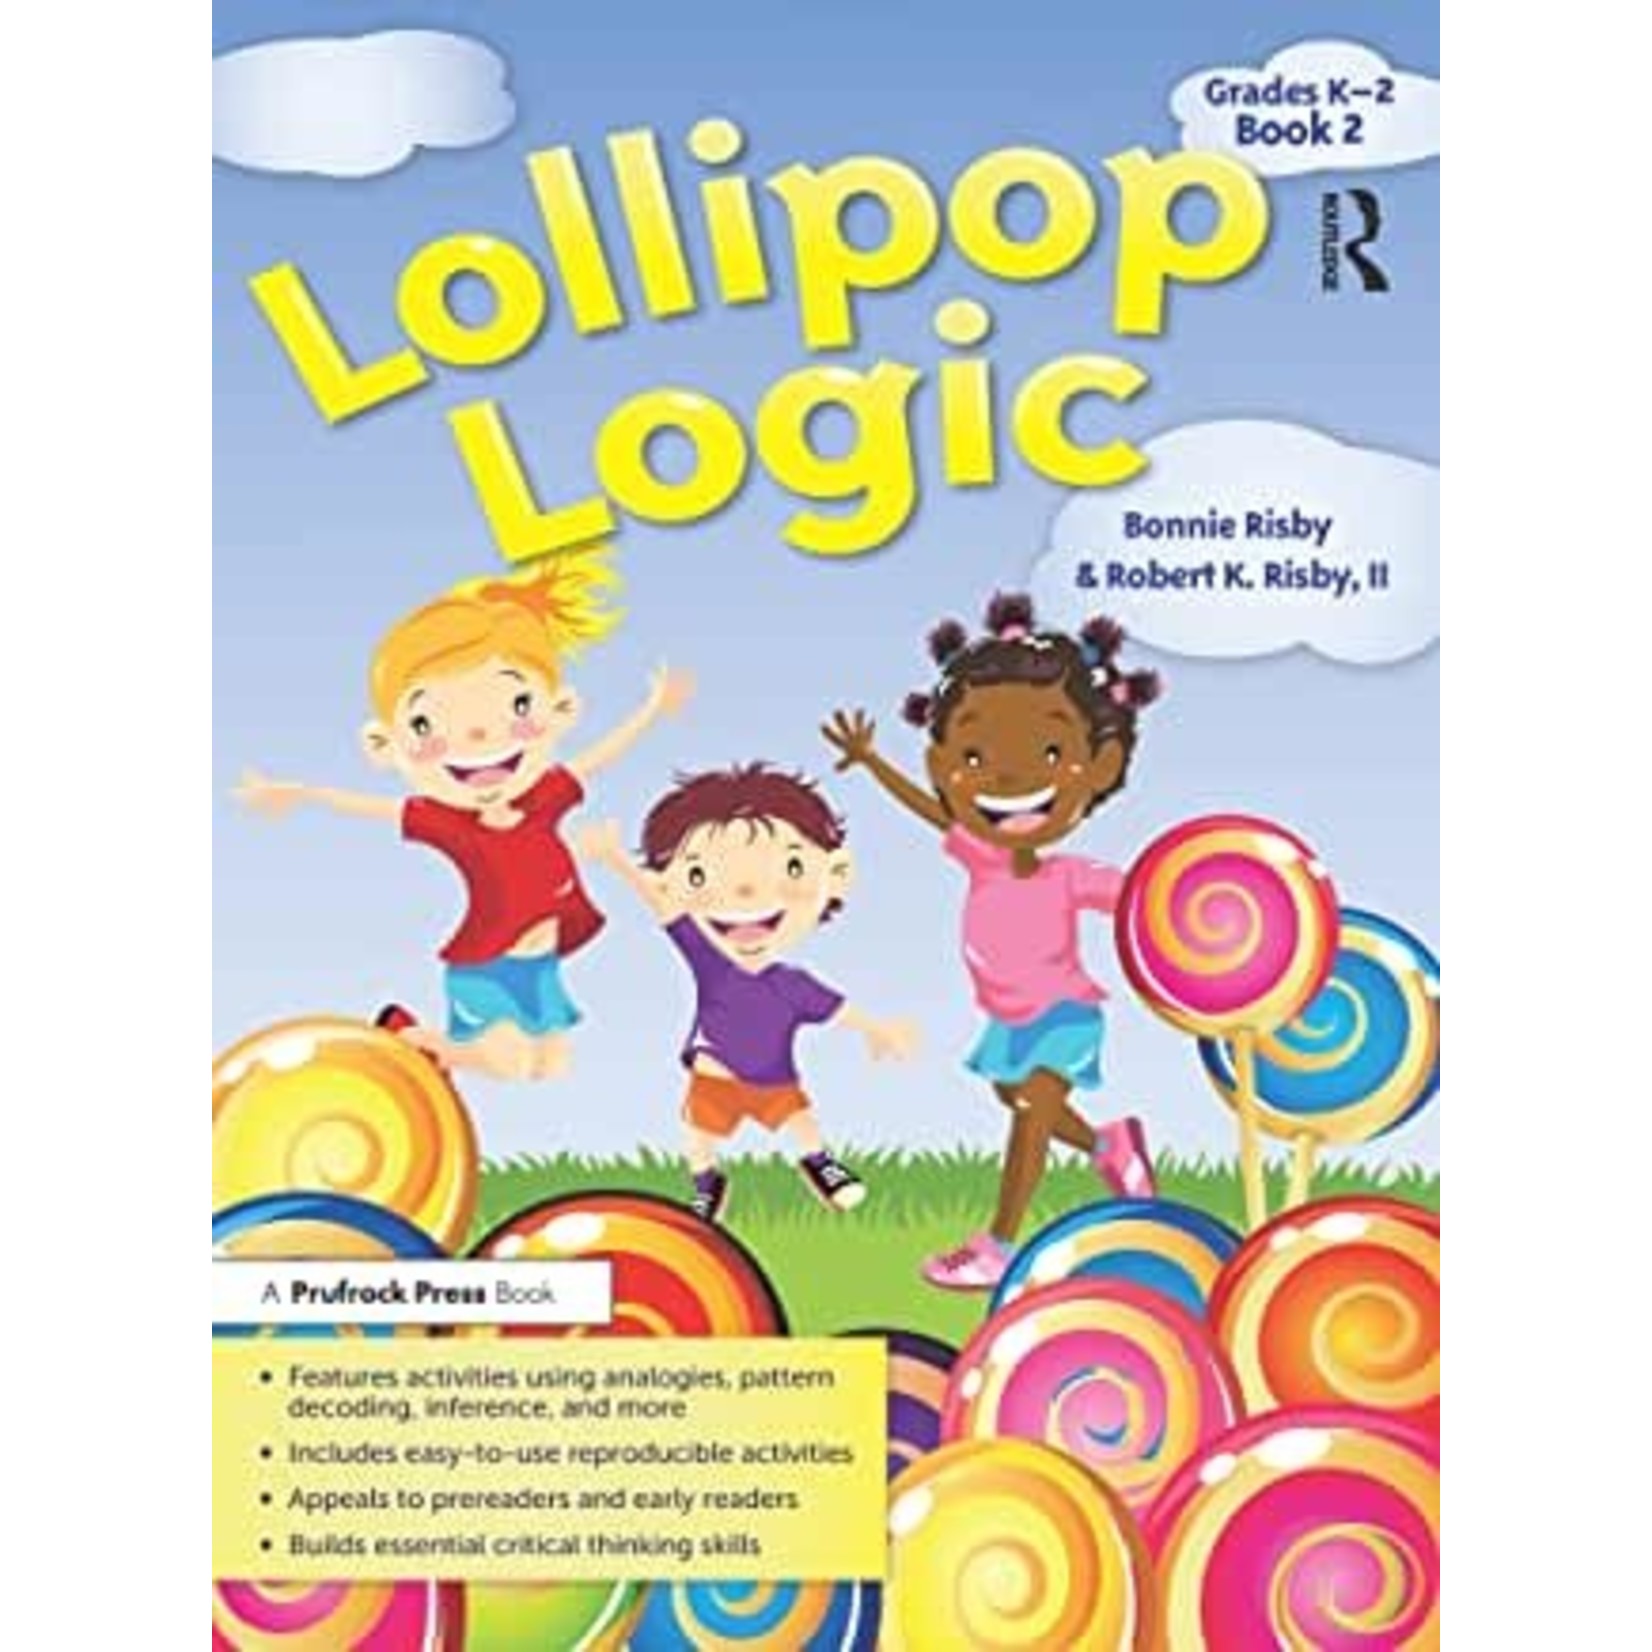 Lollipop Logic, Book 2 (Grades K-2) 1st Edition